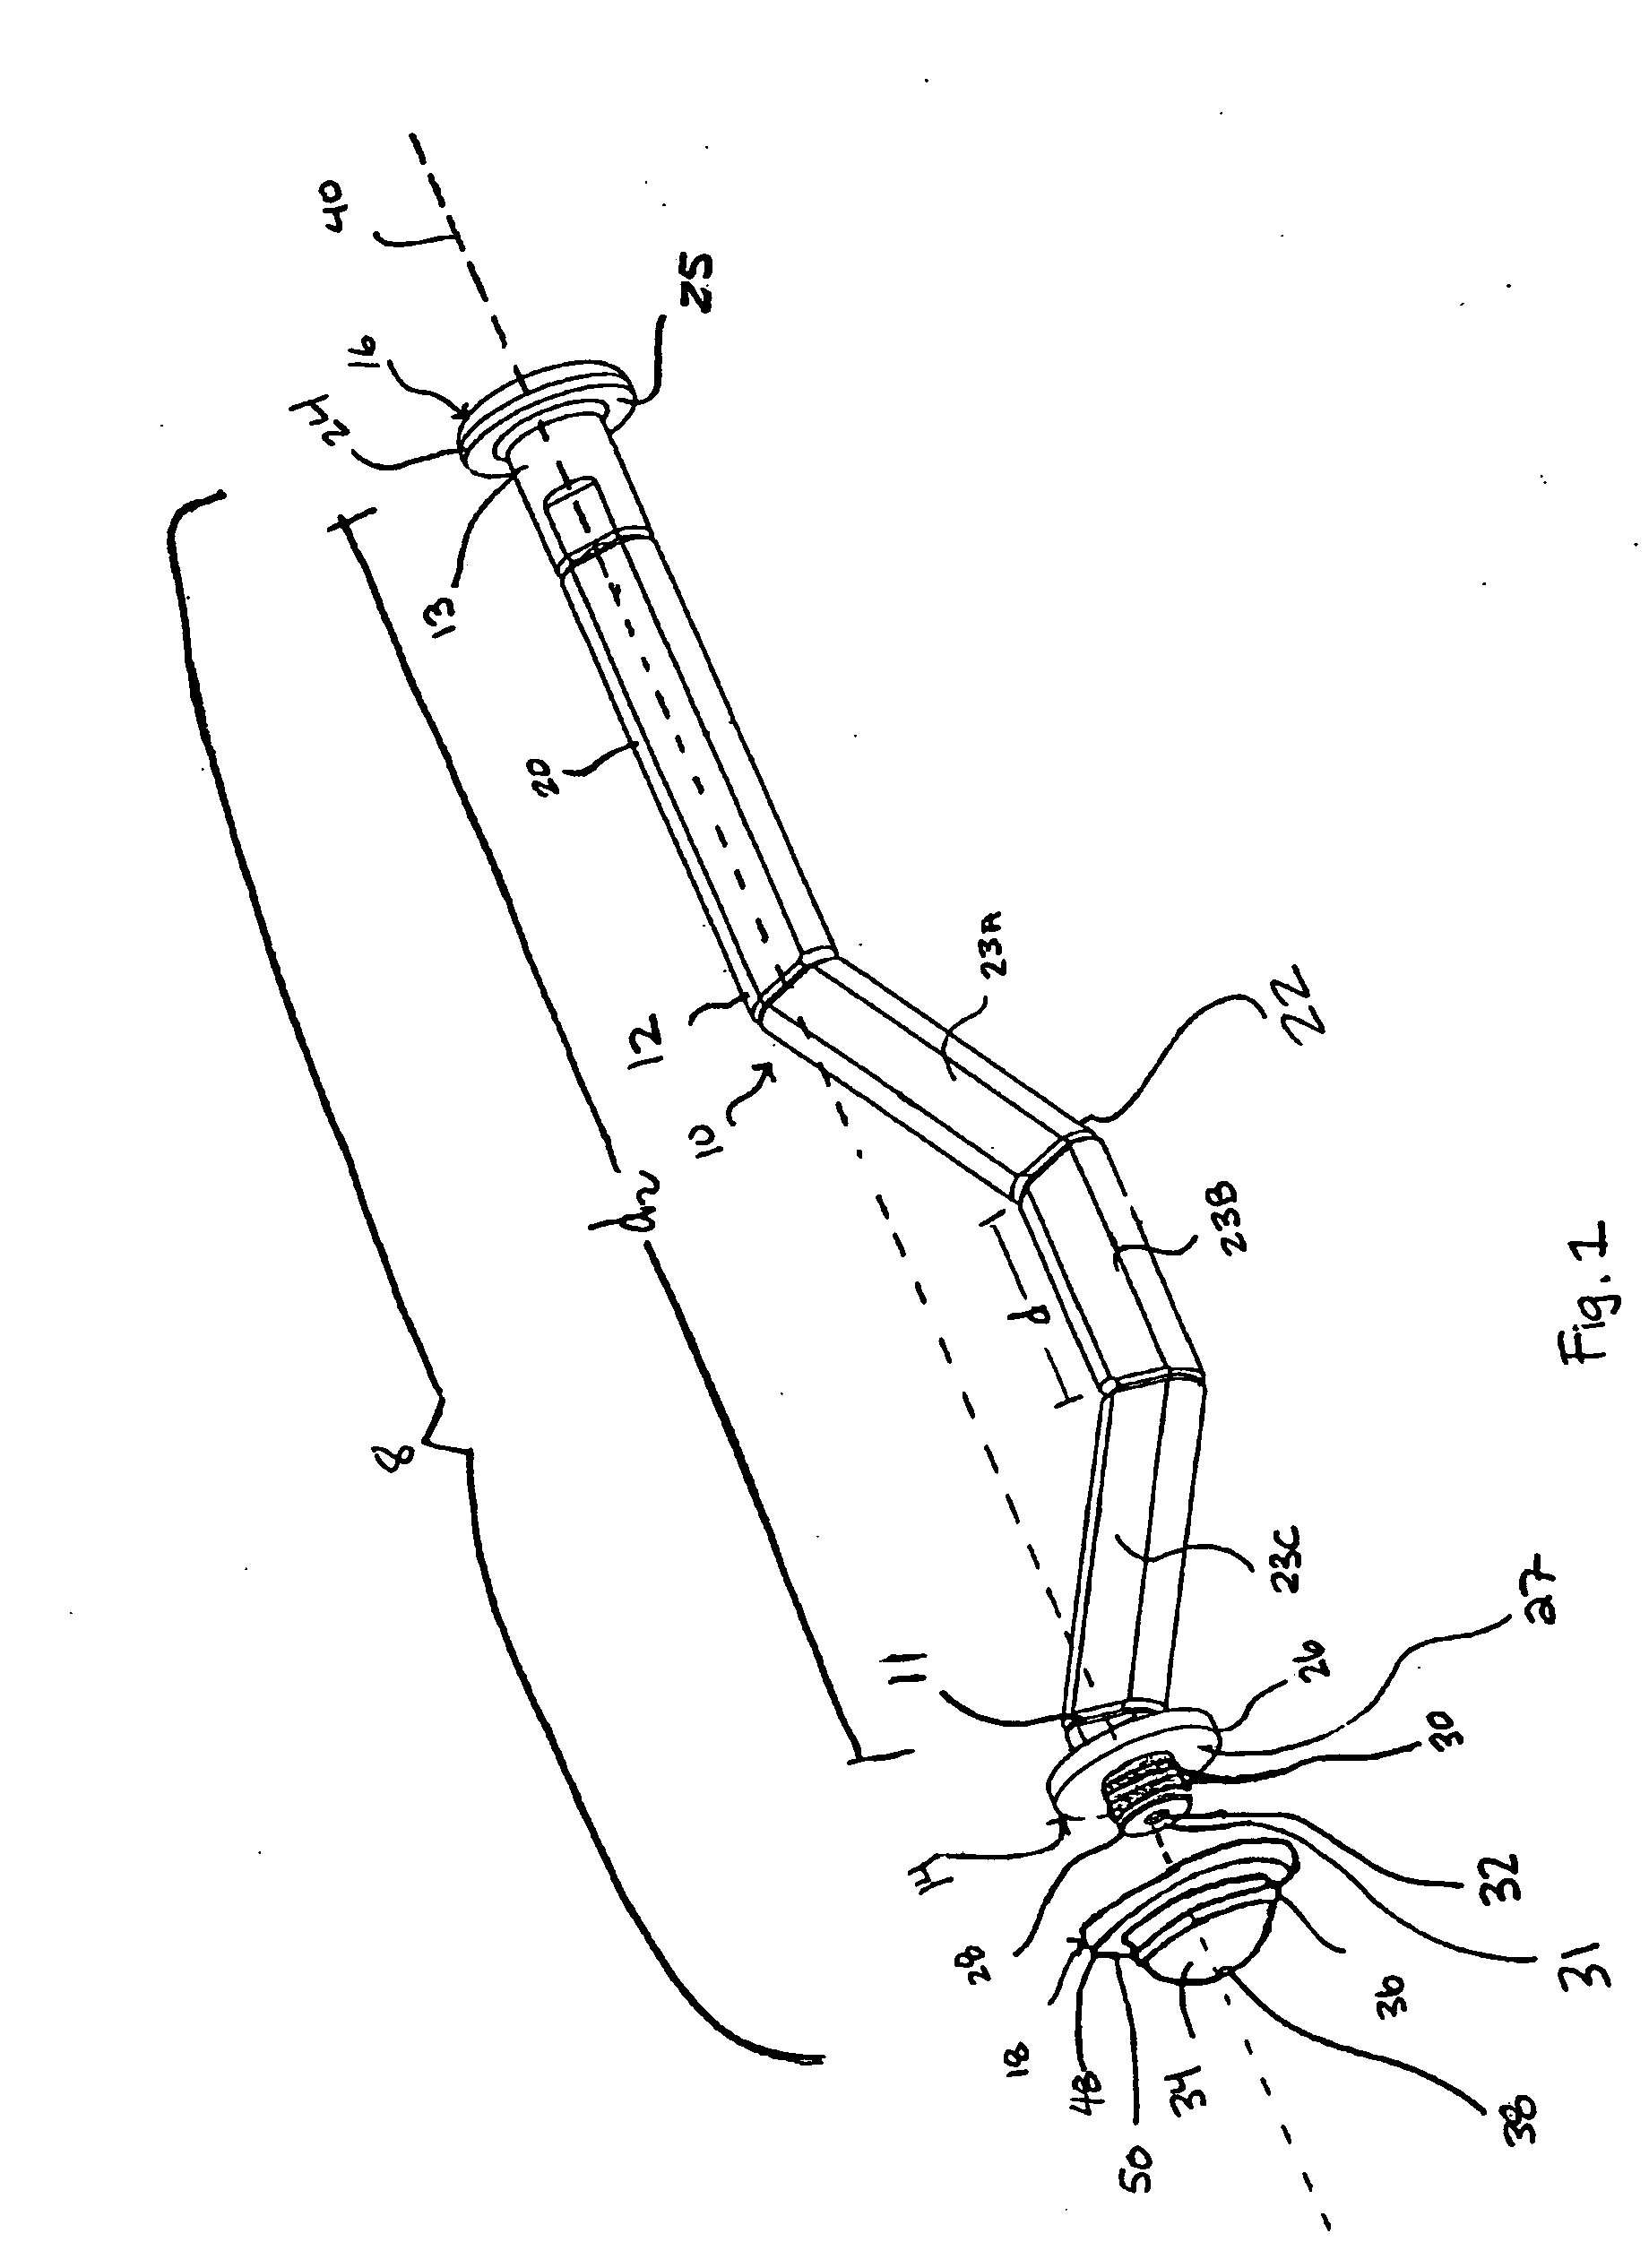 Acetabular shell impactor